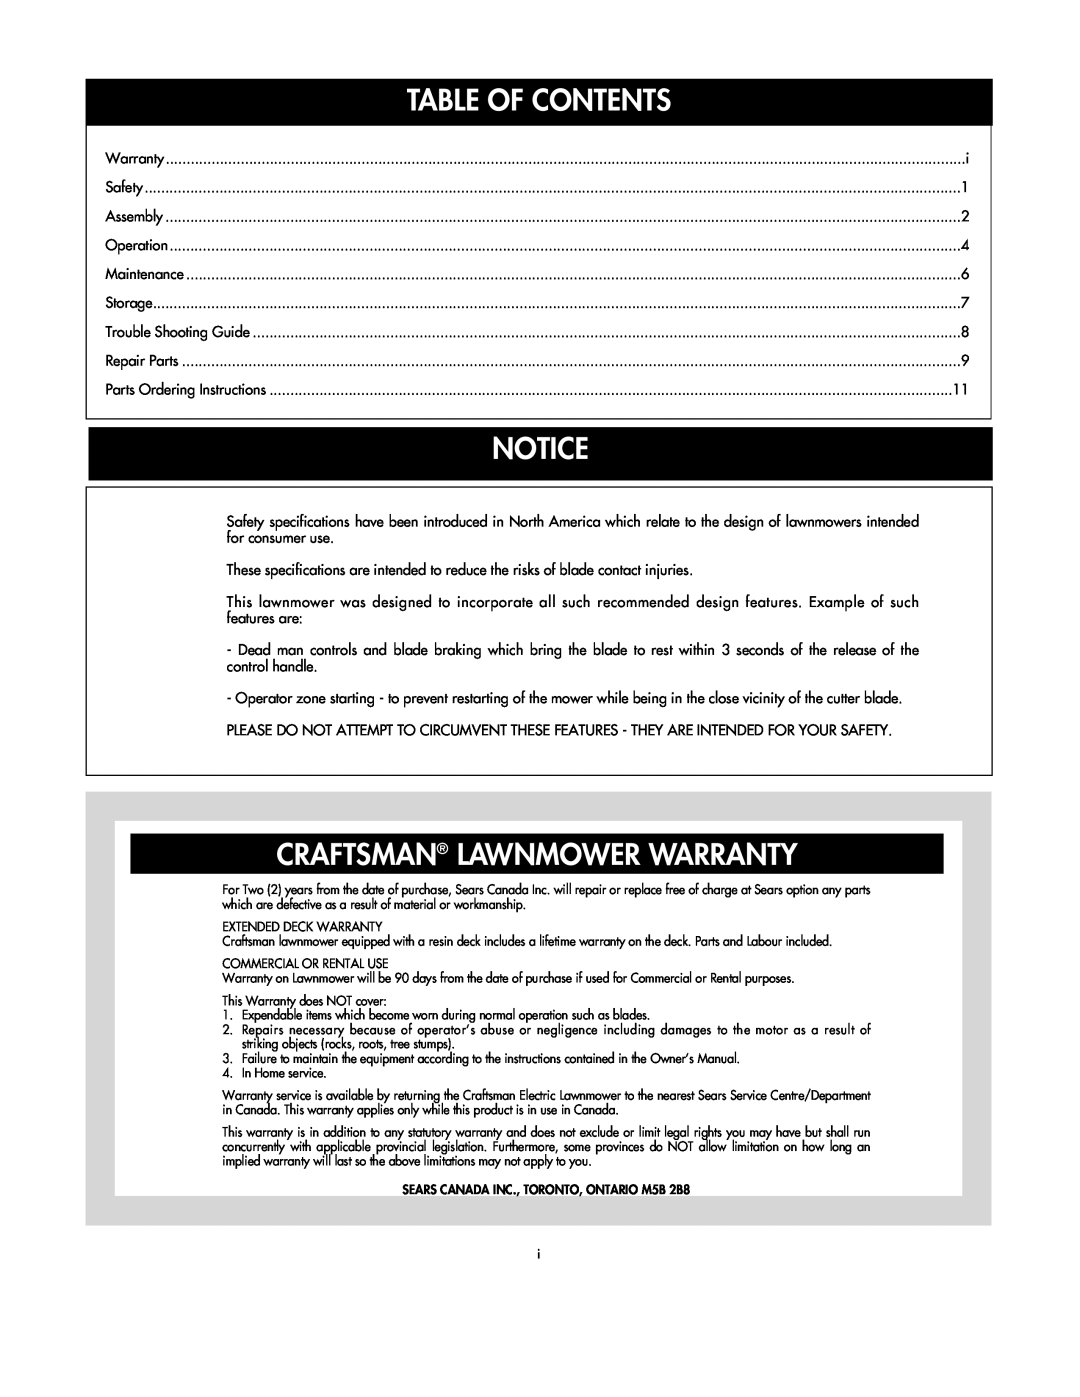 DeWalt C935-355190 owner manual Table Of Contents, Craftsman Lawnmower Warranty 